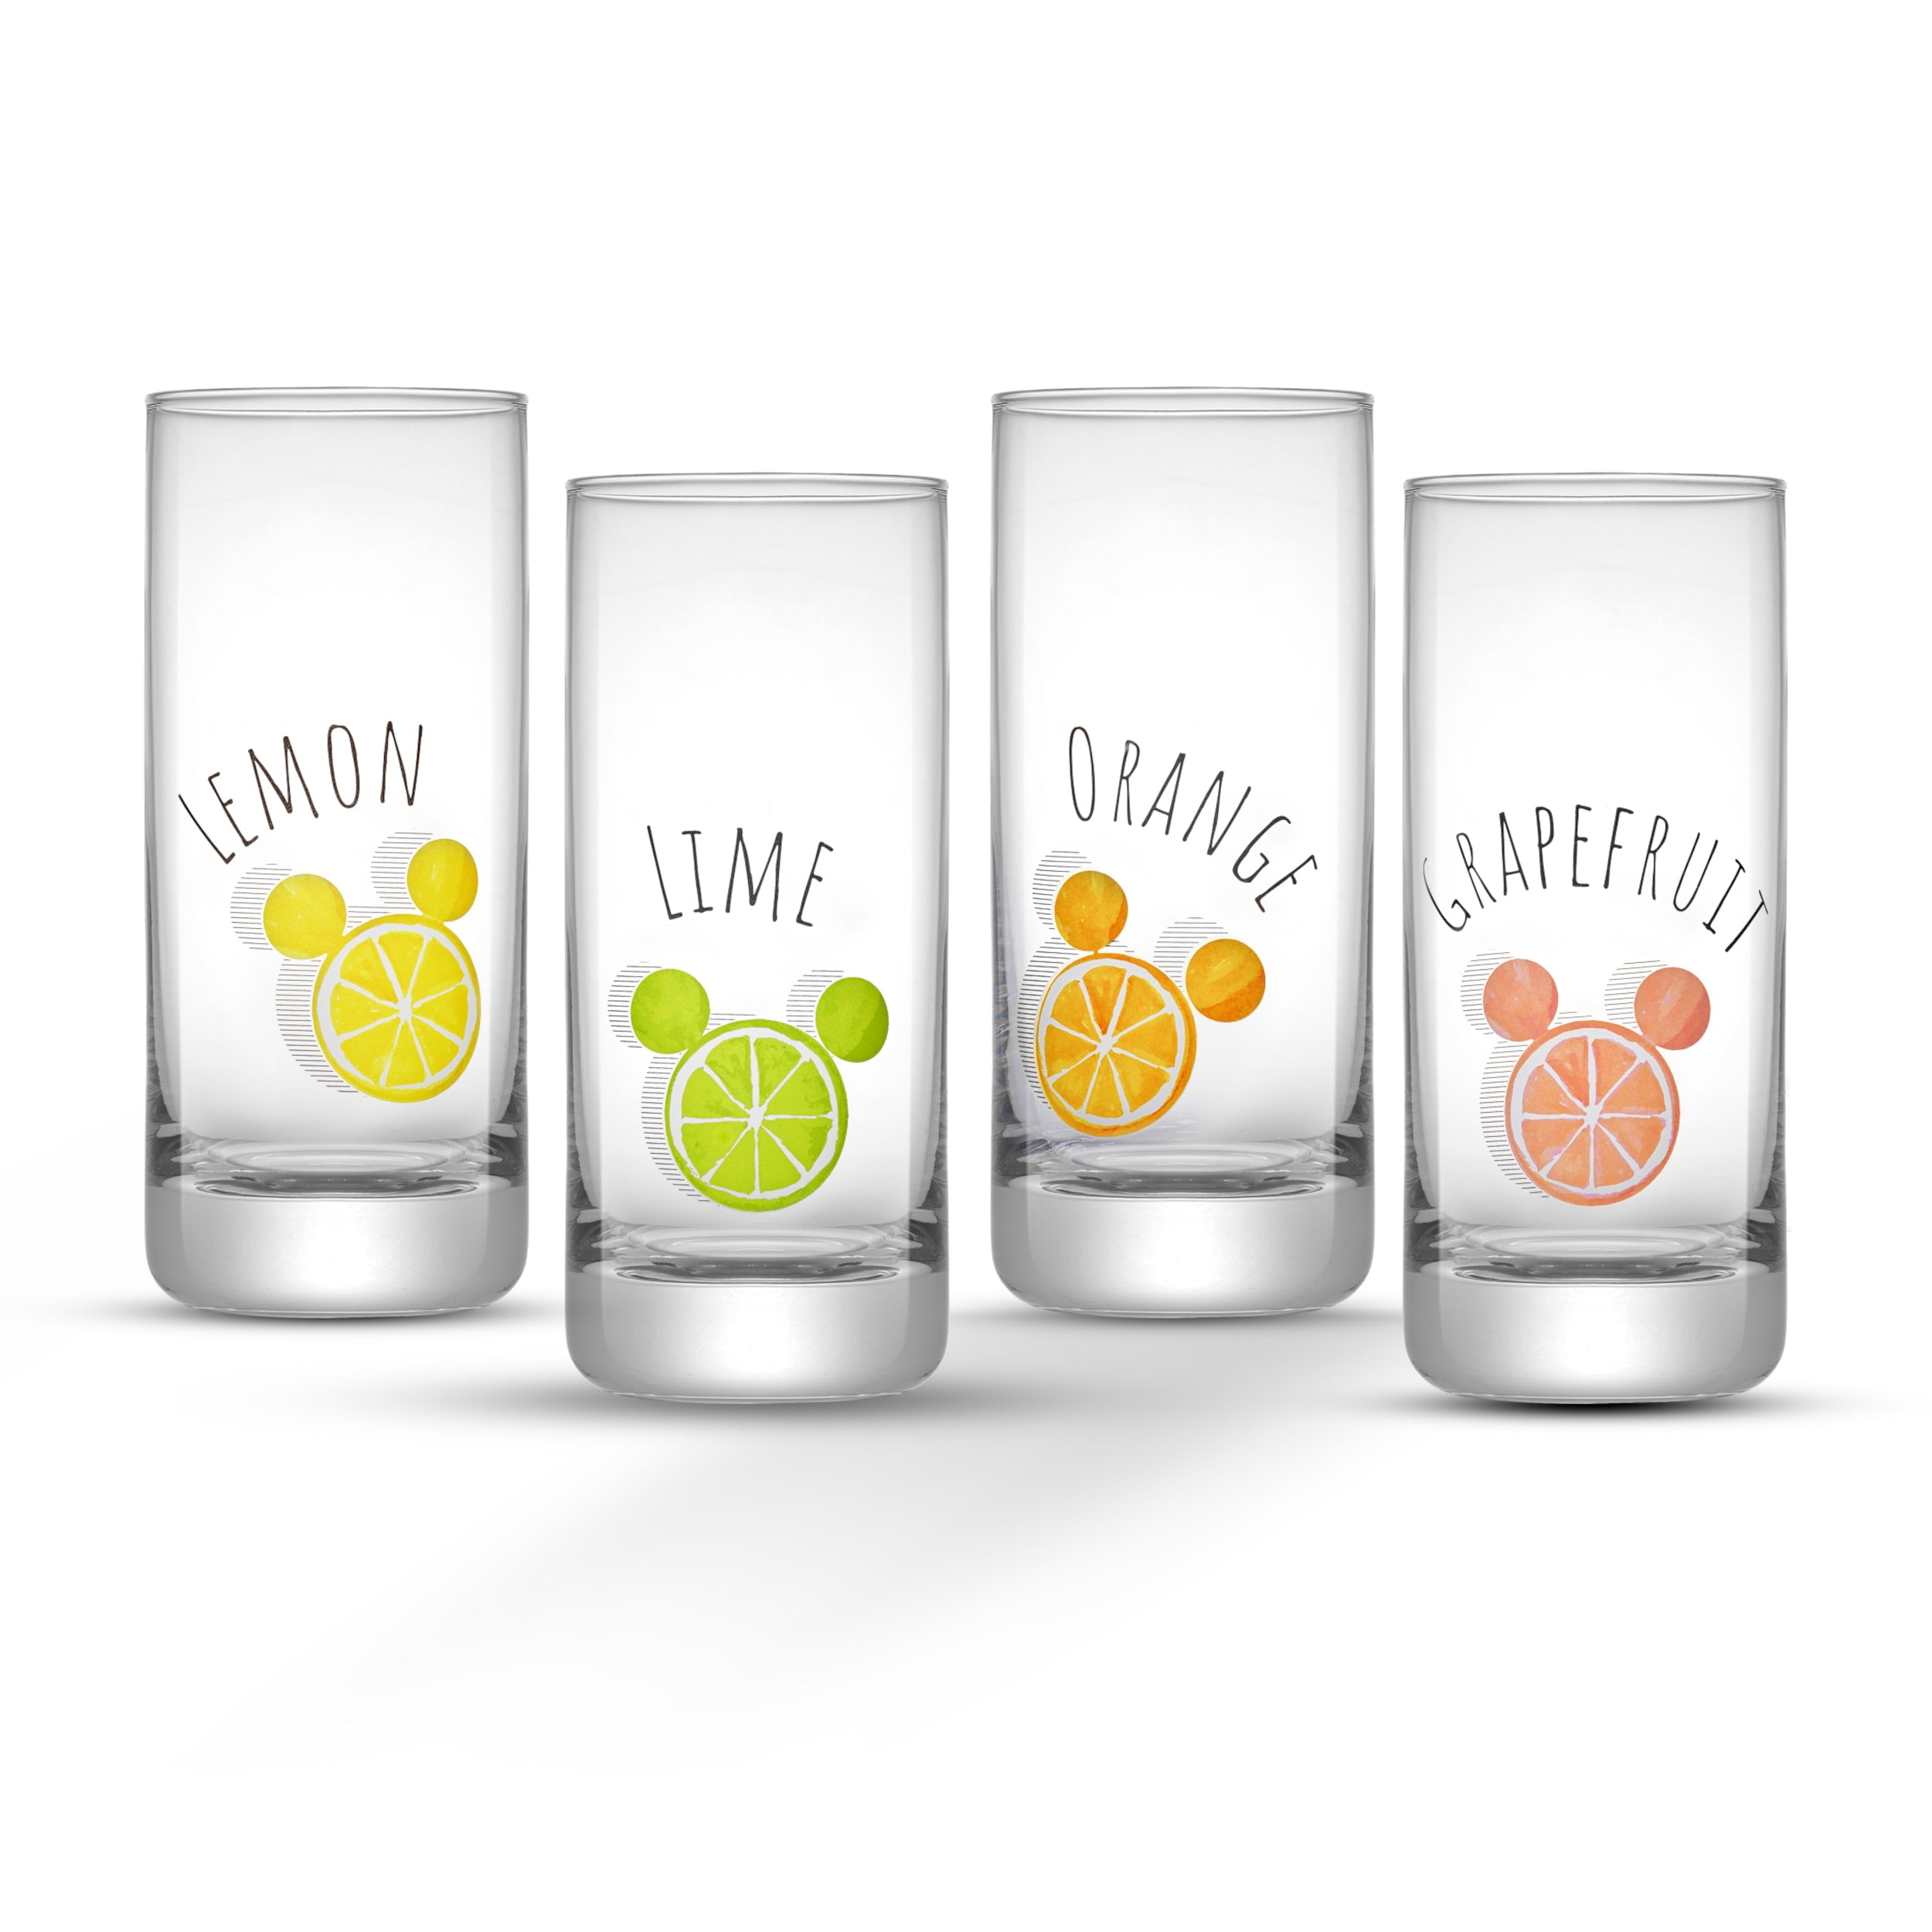 Disney Luxury Mickey Mouse Crystal Martini Glass - 10 oz - Set of 2